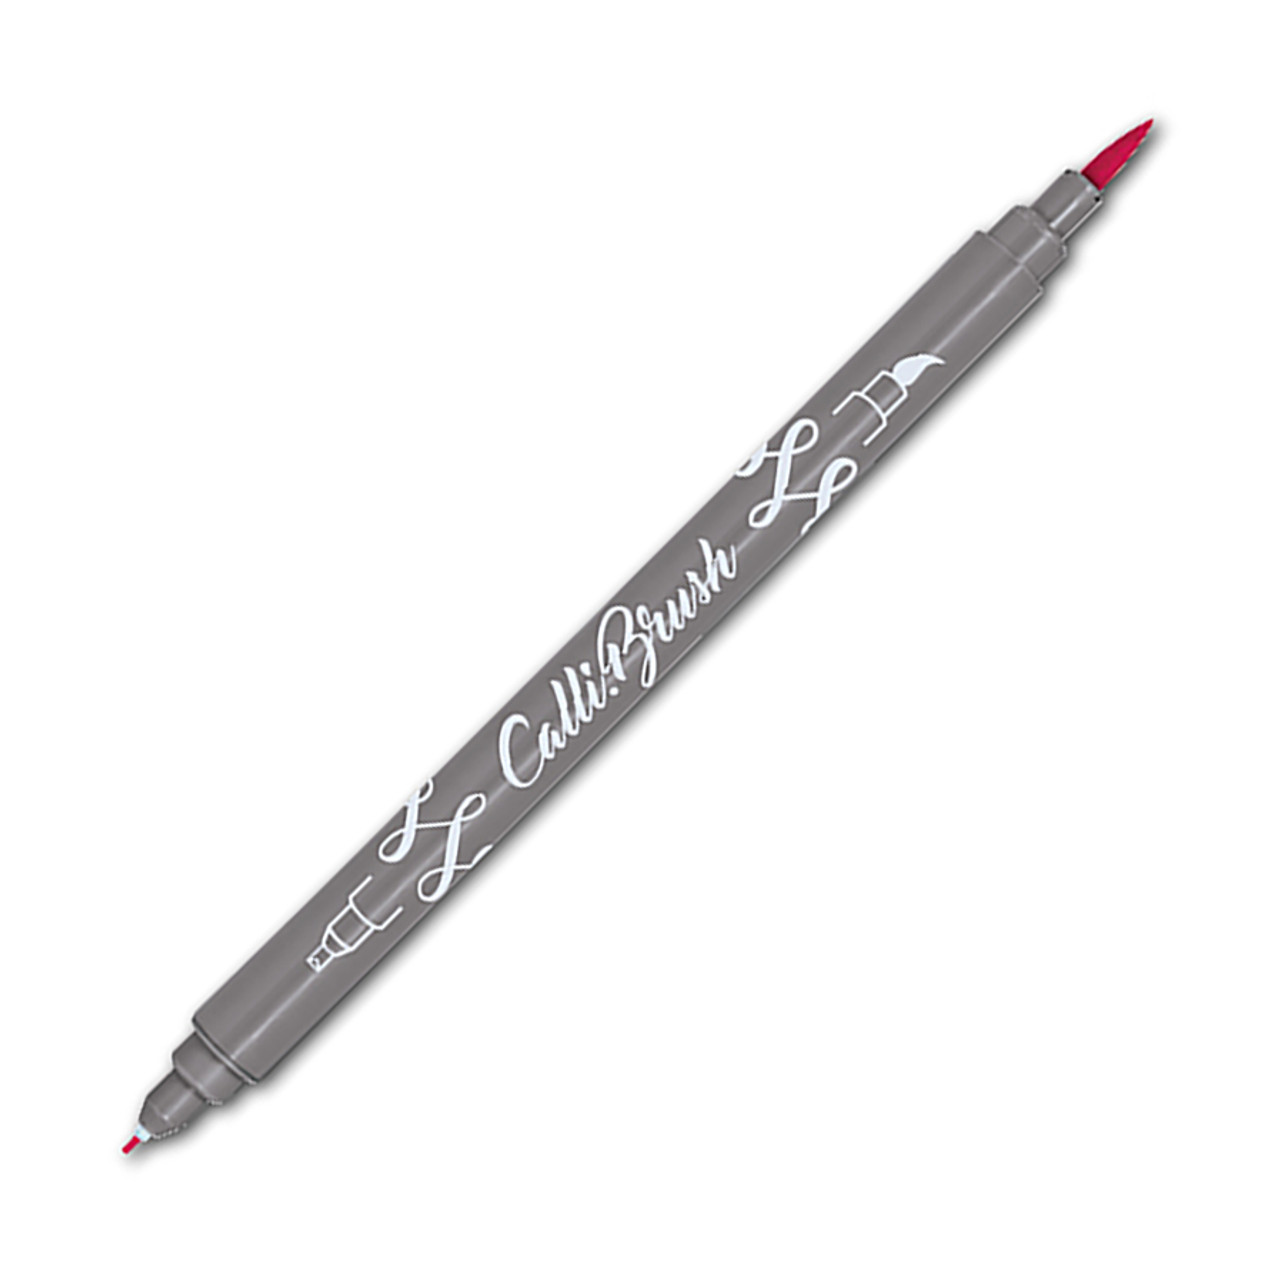 Marvy Uchida Le Pen Flex - 24 Colors - Colored Calligraphy Pens